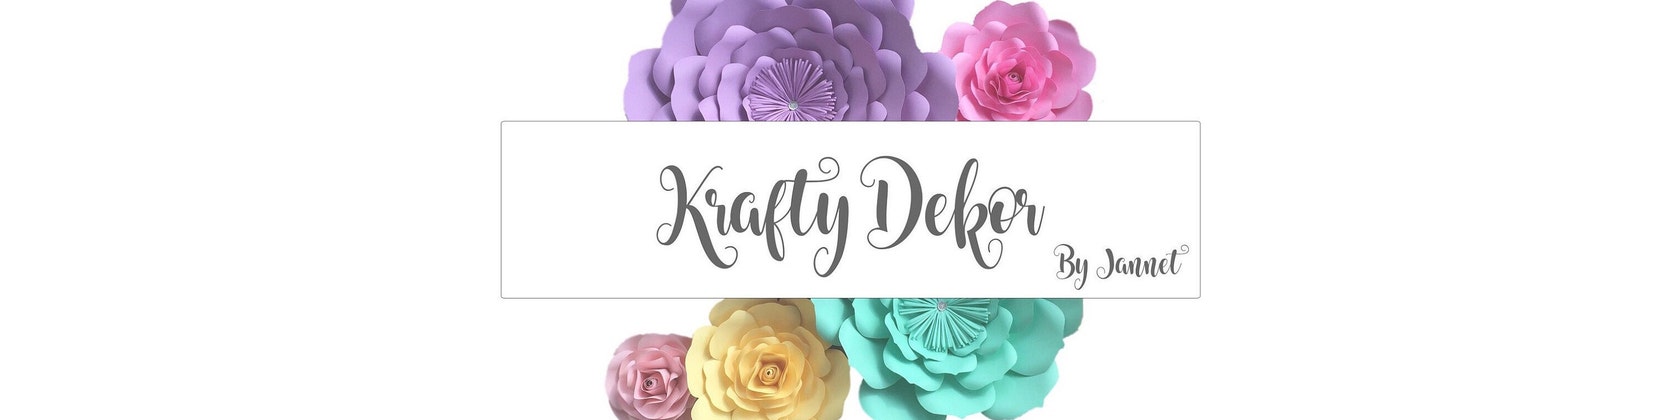 Custom made Party Decor and Handmade Paper Flowers by KraftyDekor